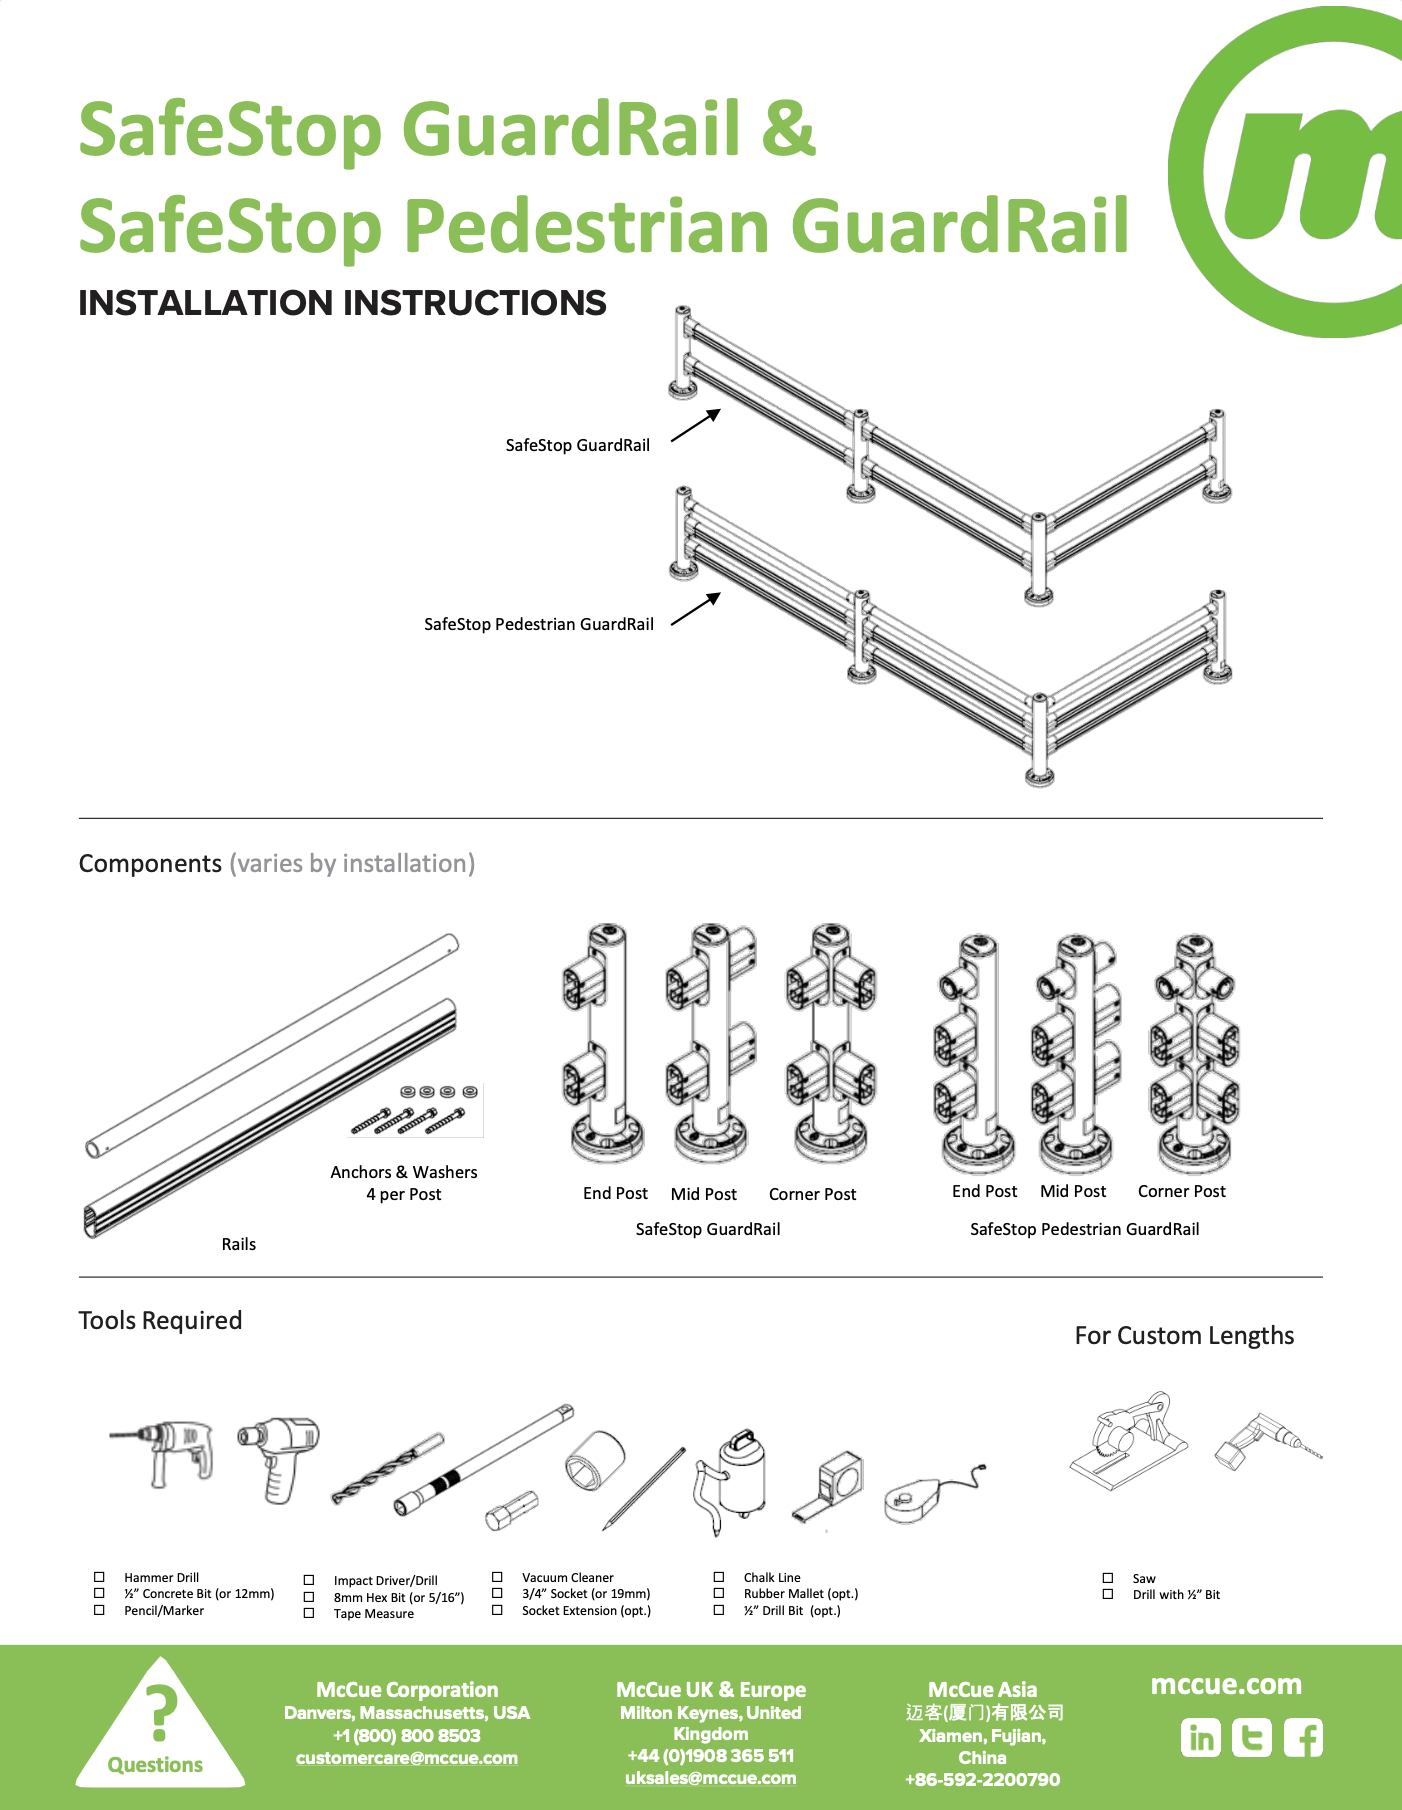 SafeStop Pedestrian GuardRail Installation Instructions